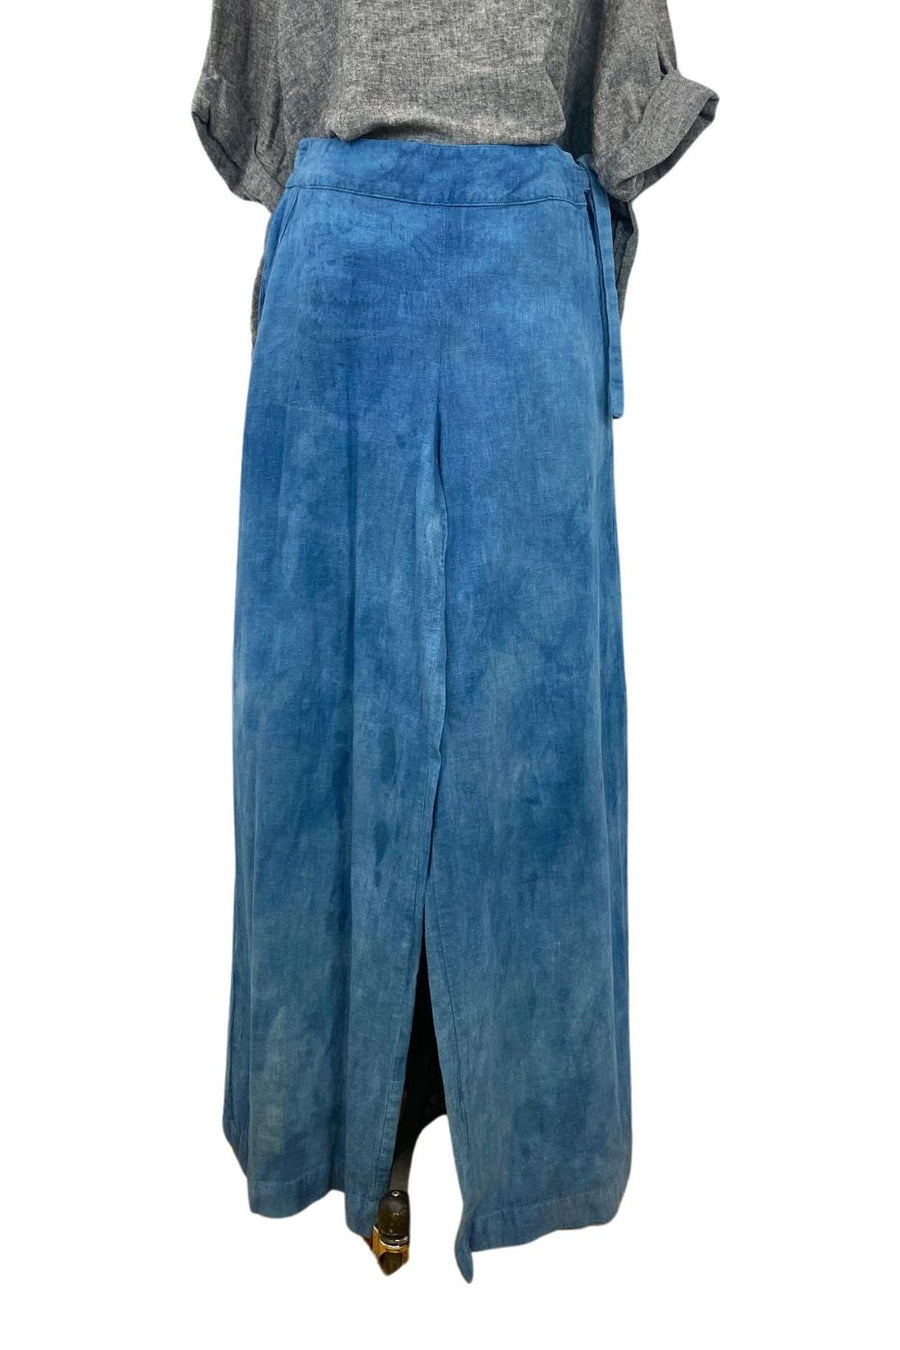 Flowy Lightweight Ida Pants in Blue | Organic Cotton and Hemp